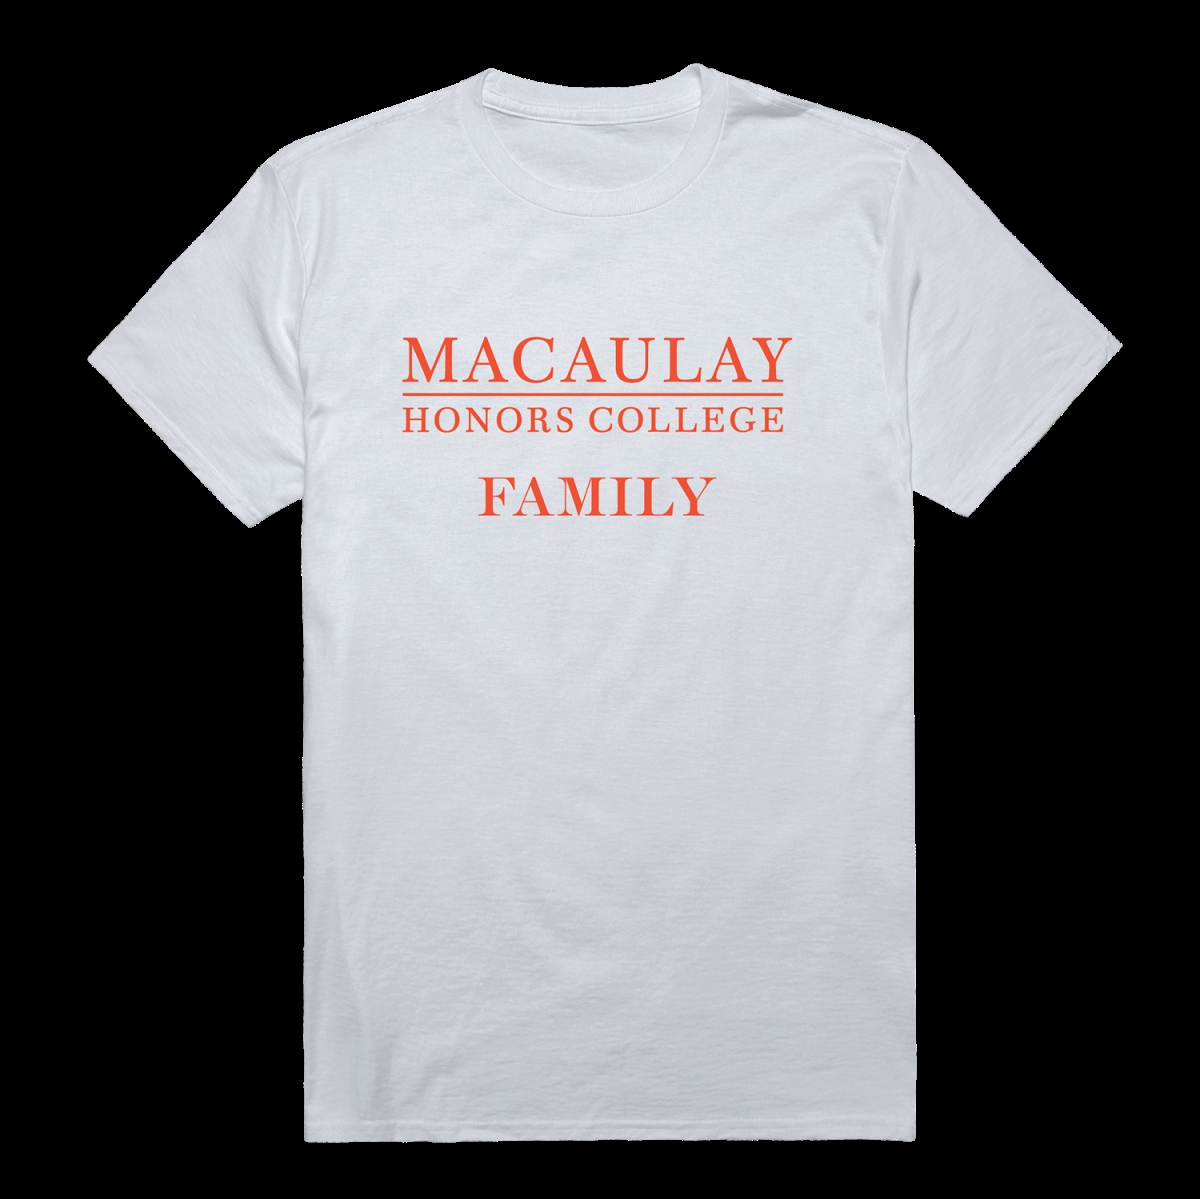 W Republic 571-534-WHT-02 Macaulay Honors College Family T-Shirt&#44; White - Medium